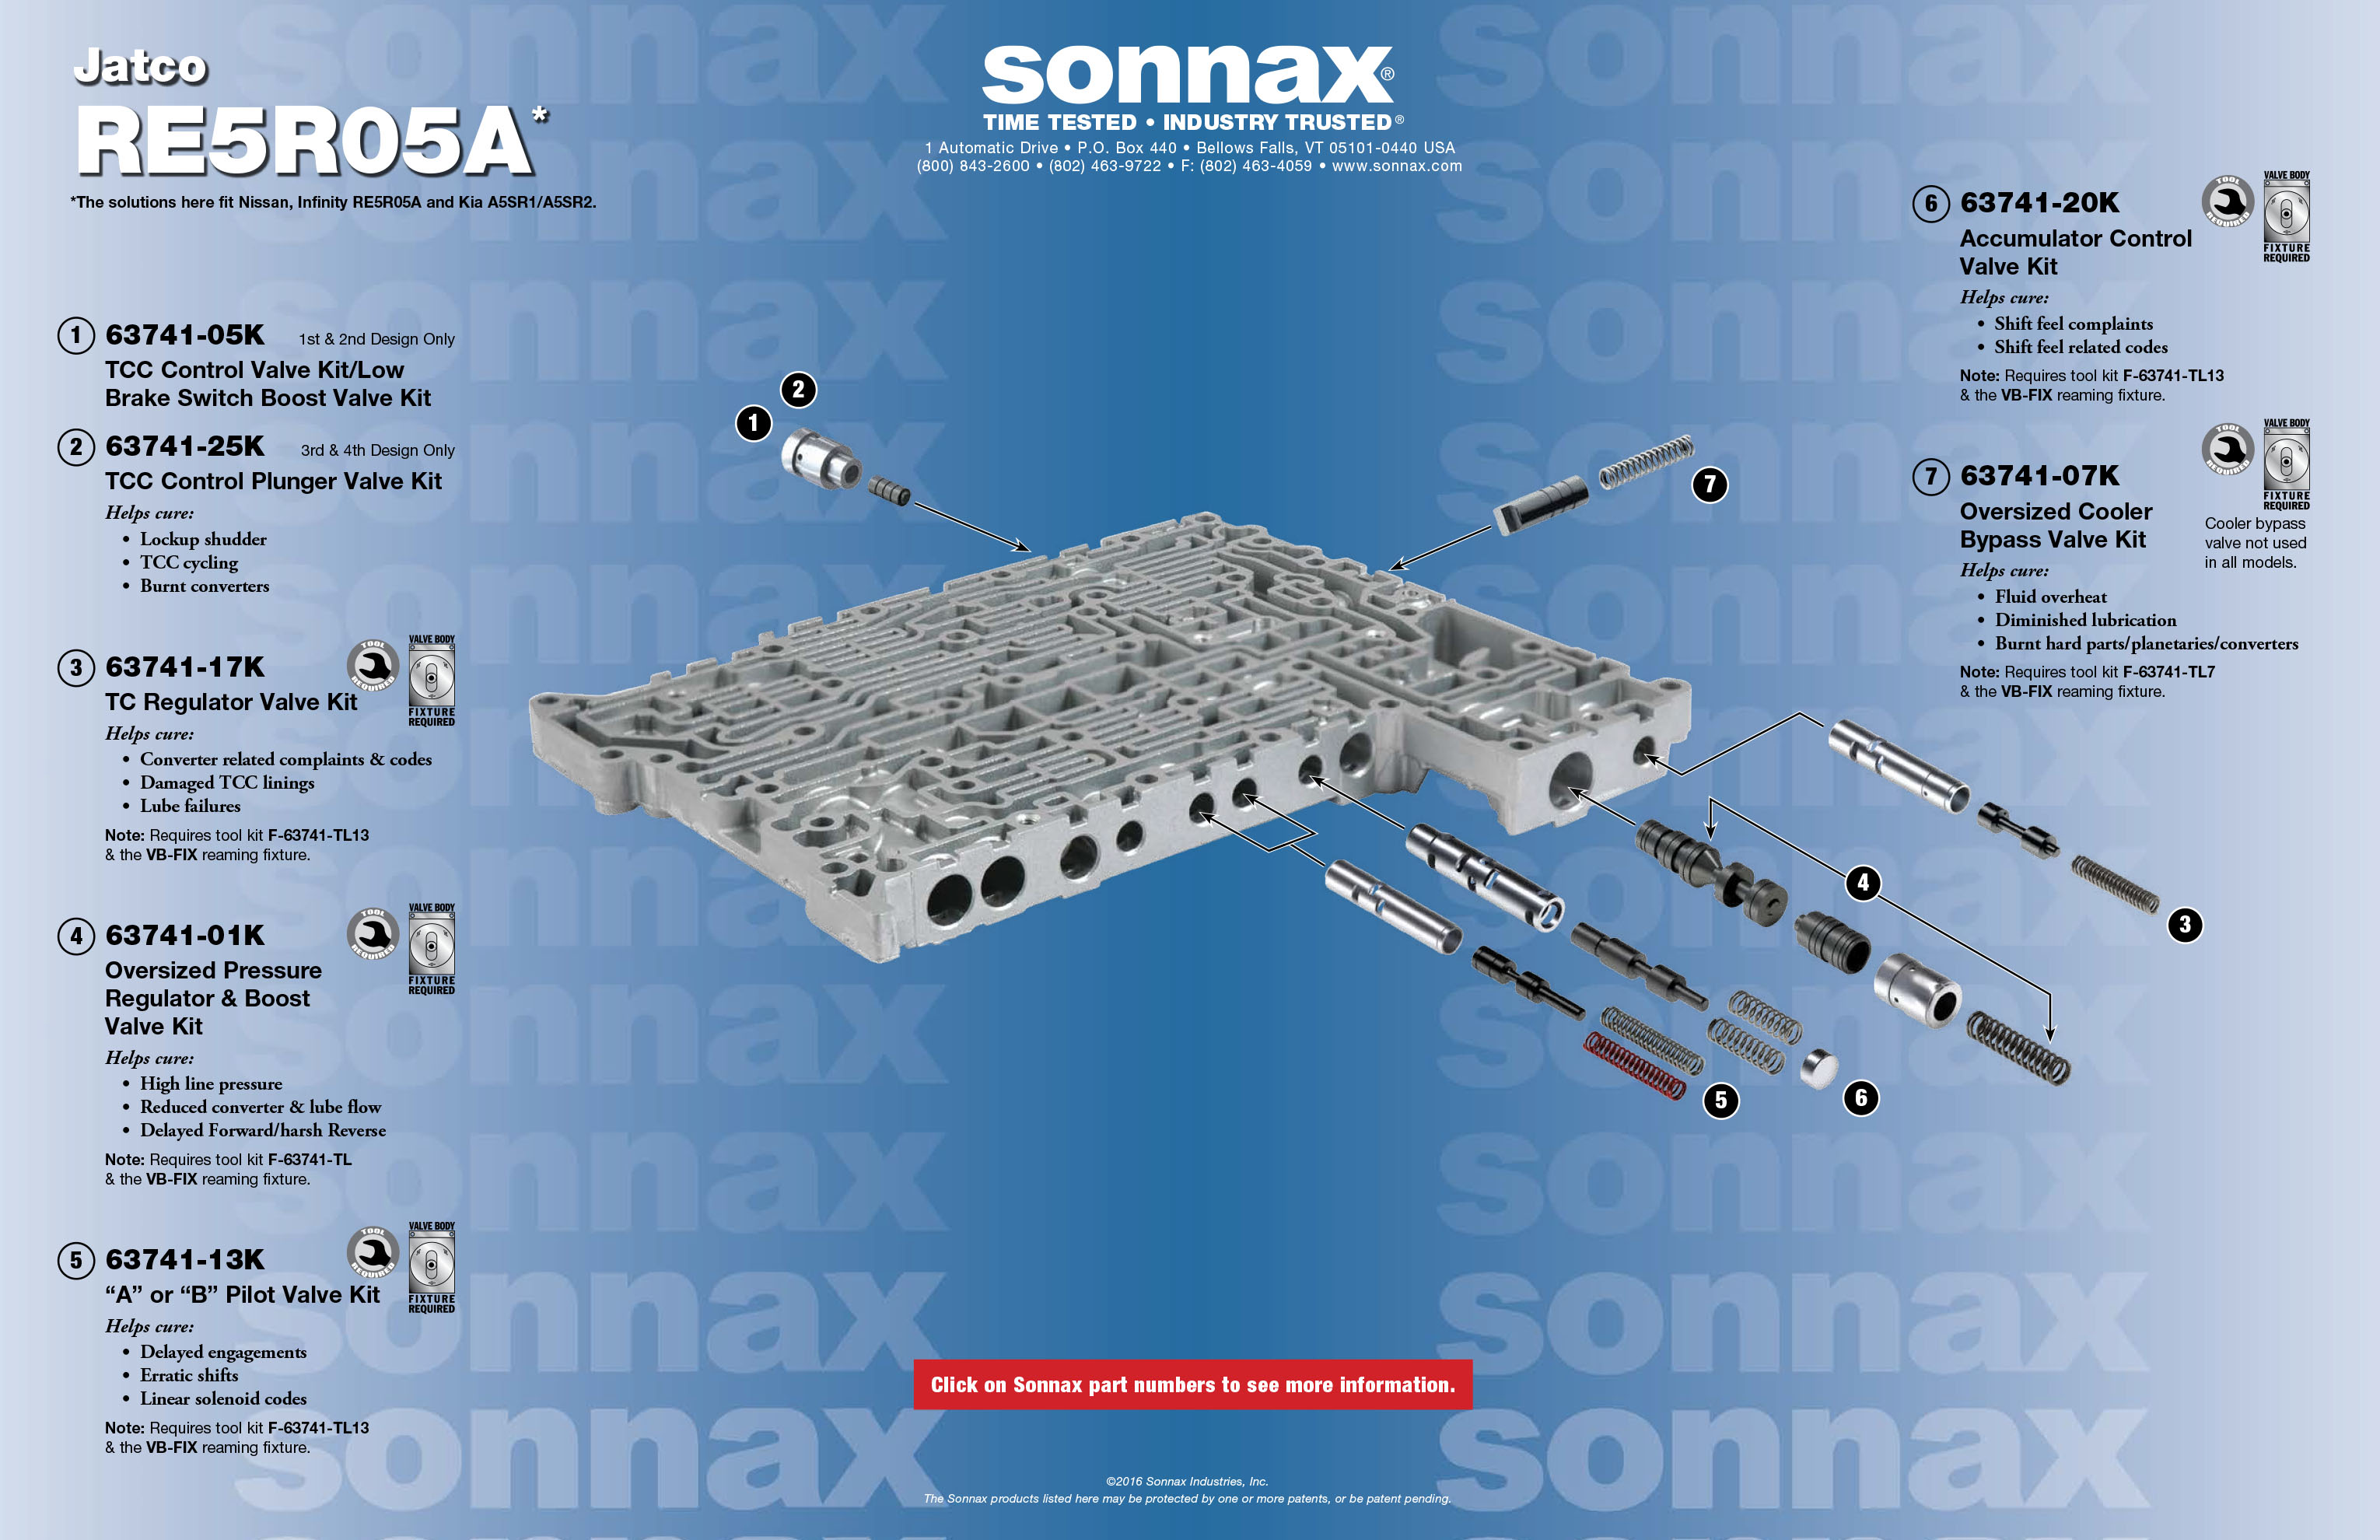 Sonnax Oversized Cooler Bypass Valve Kit - 63741-07K 700r4 wiring schematic 